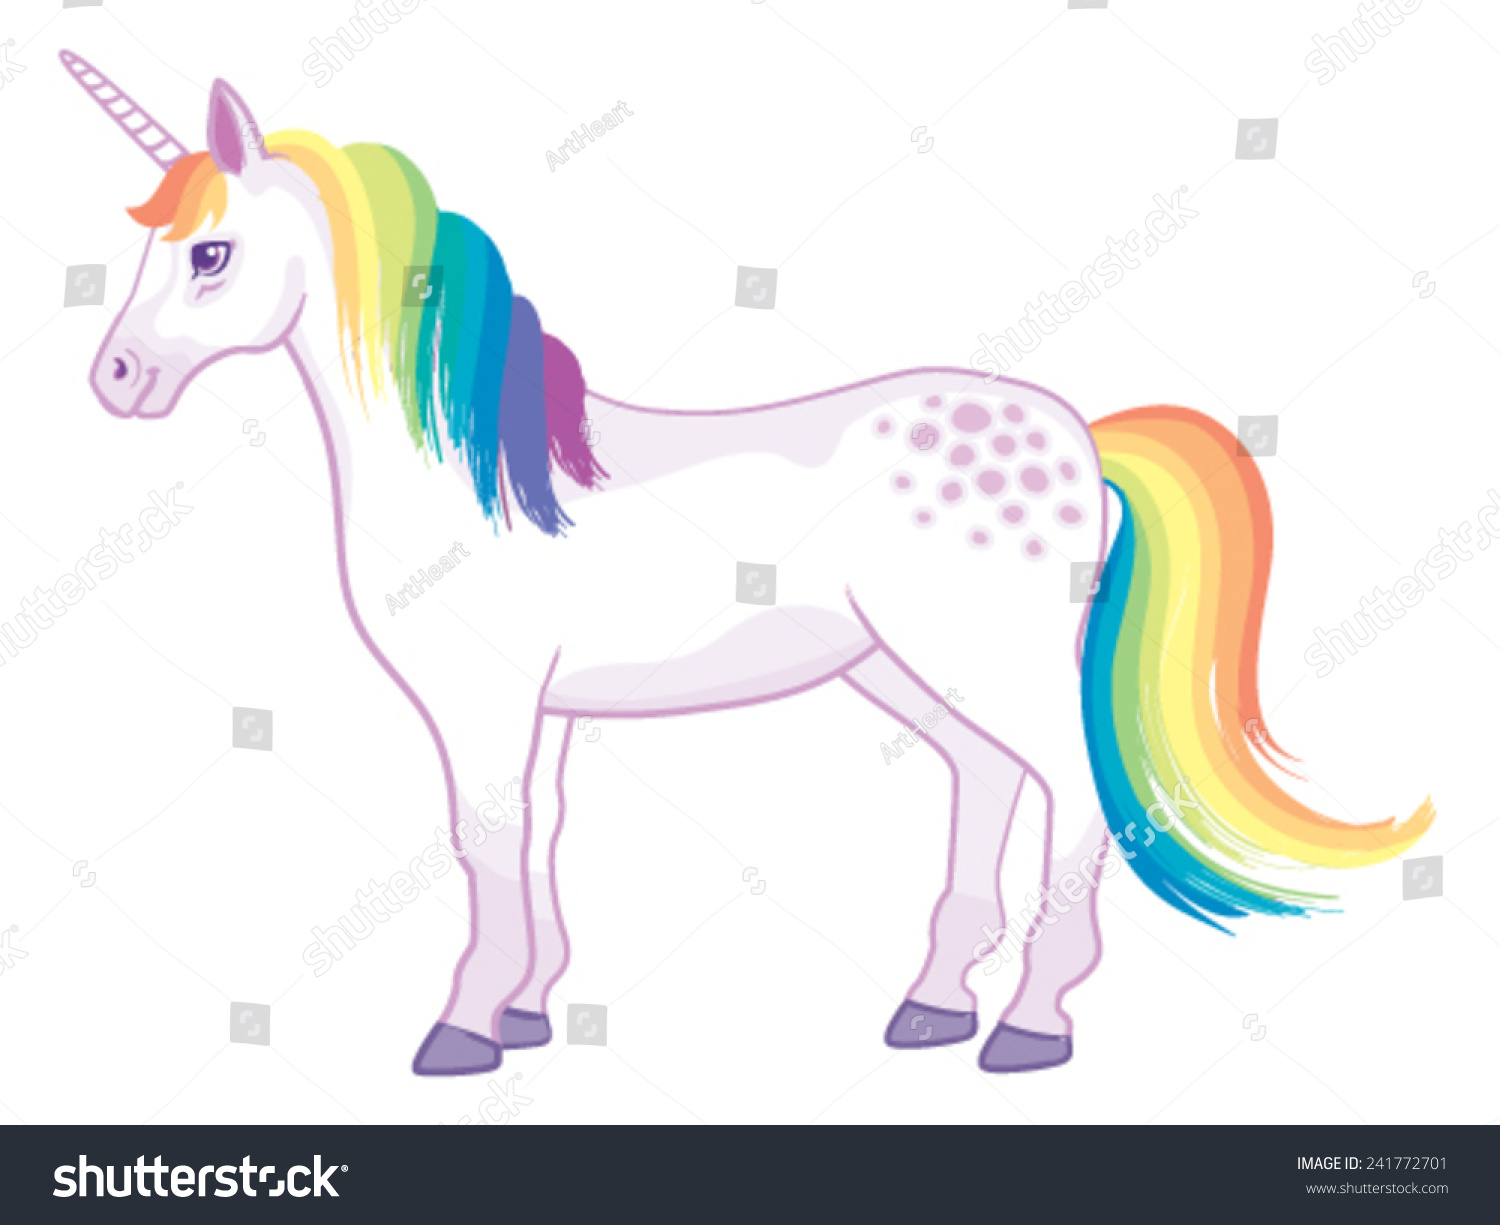 Cartoon Unicorn Rainbow Mane Tail Standing Stock Vector 241772701 - Shutterstock